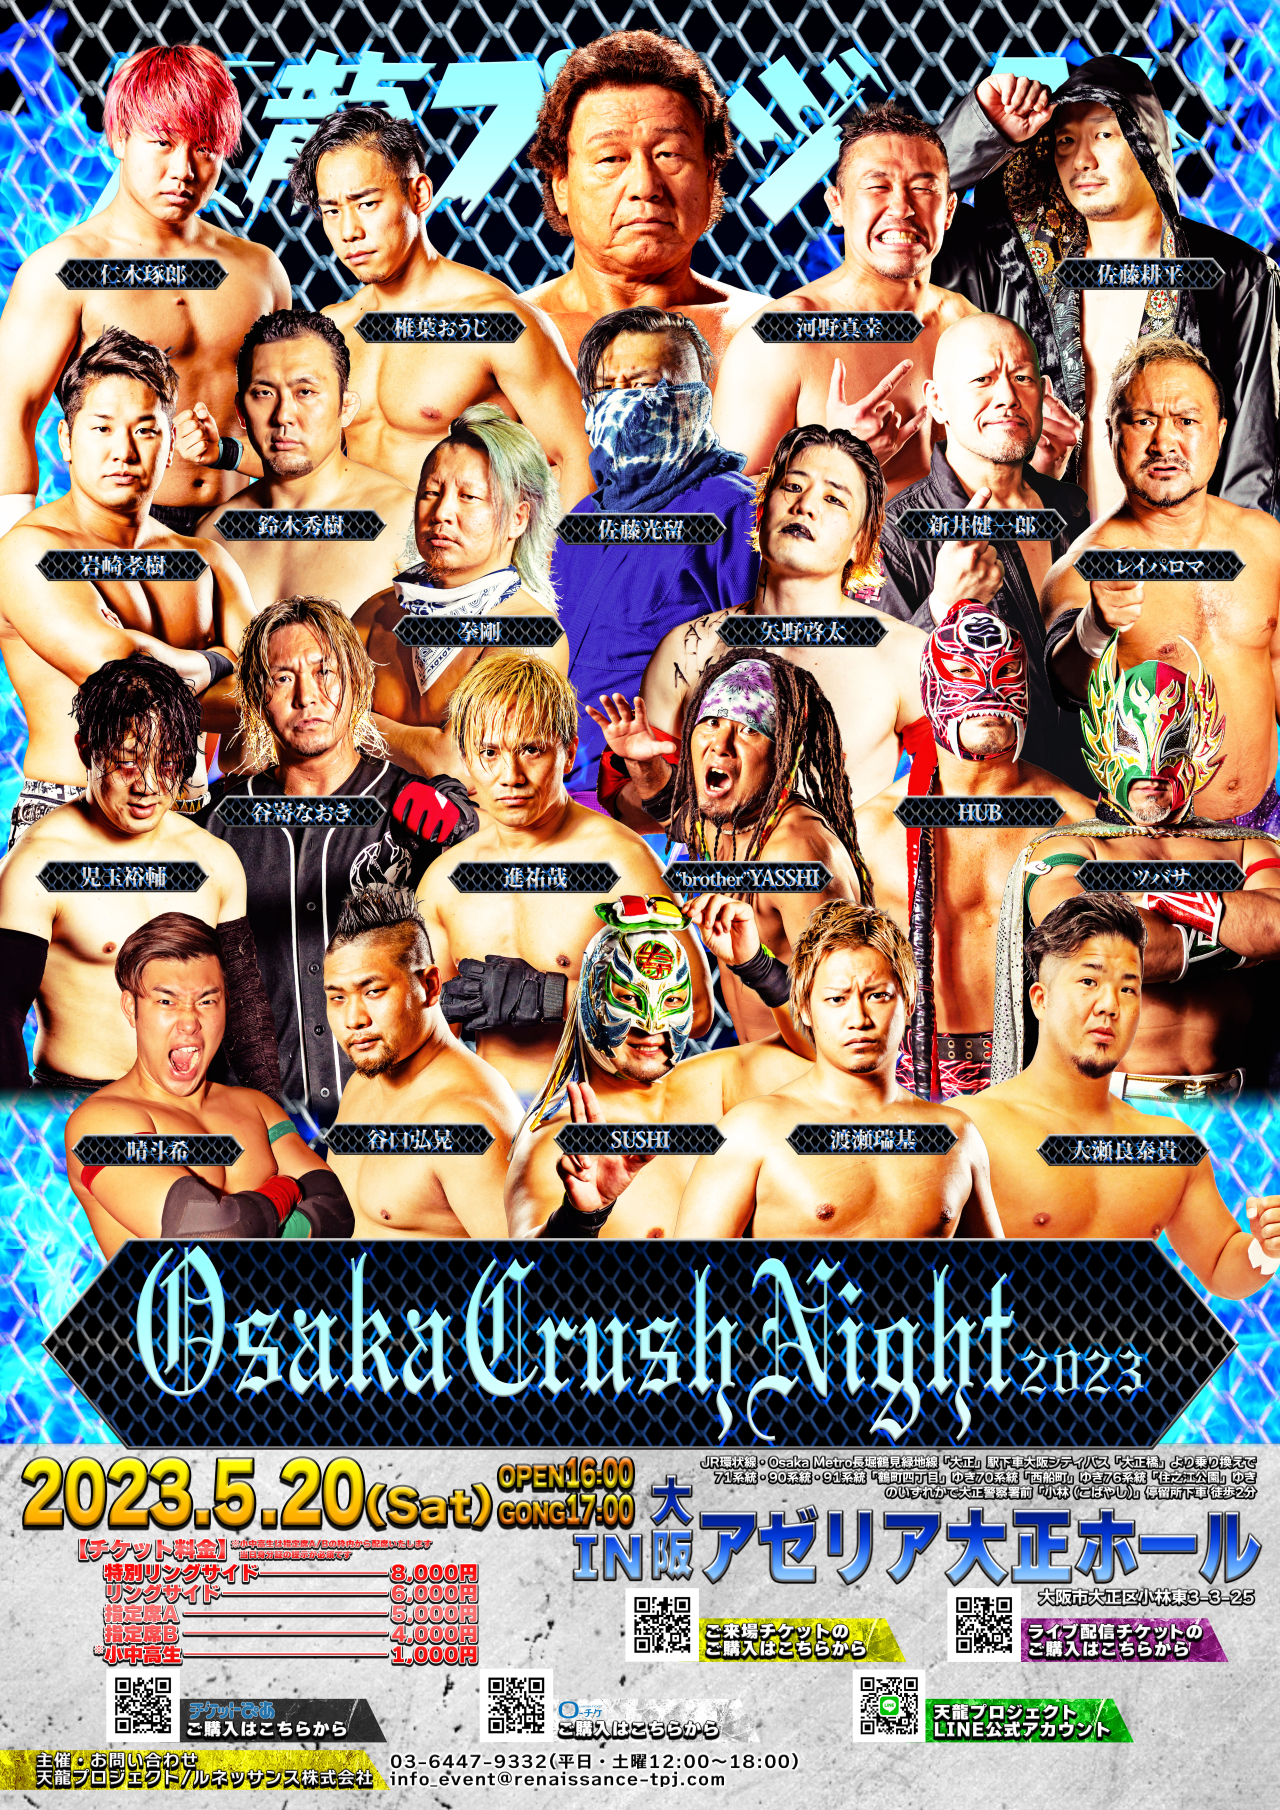 5.20『Osaka Crush Night2023』全出場選手決定のお知らせ(2023.4.2更新)